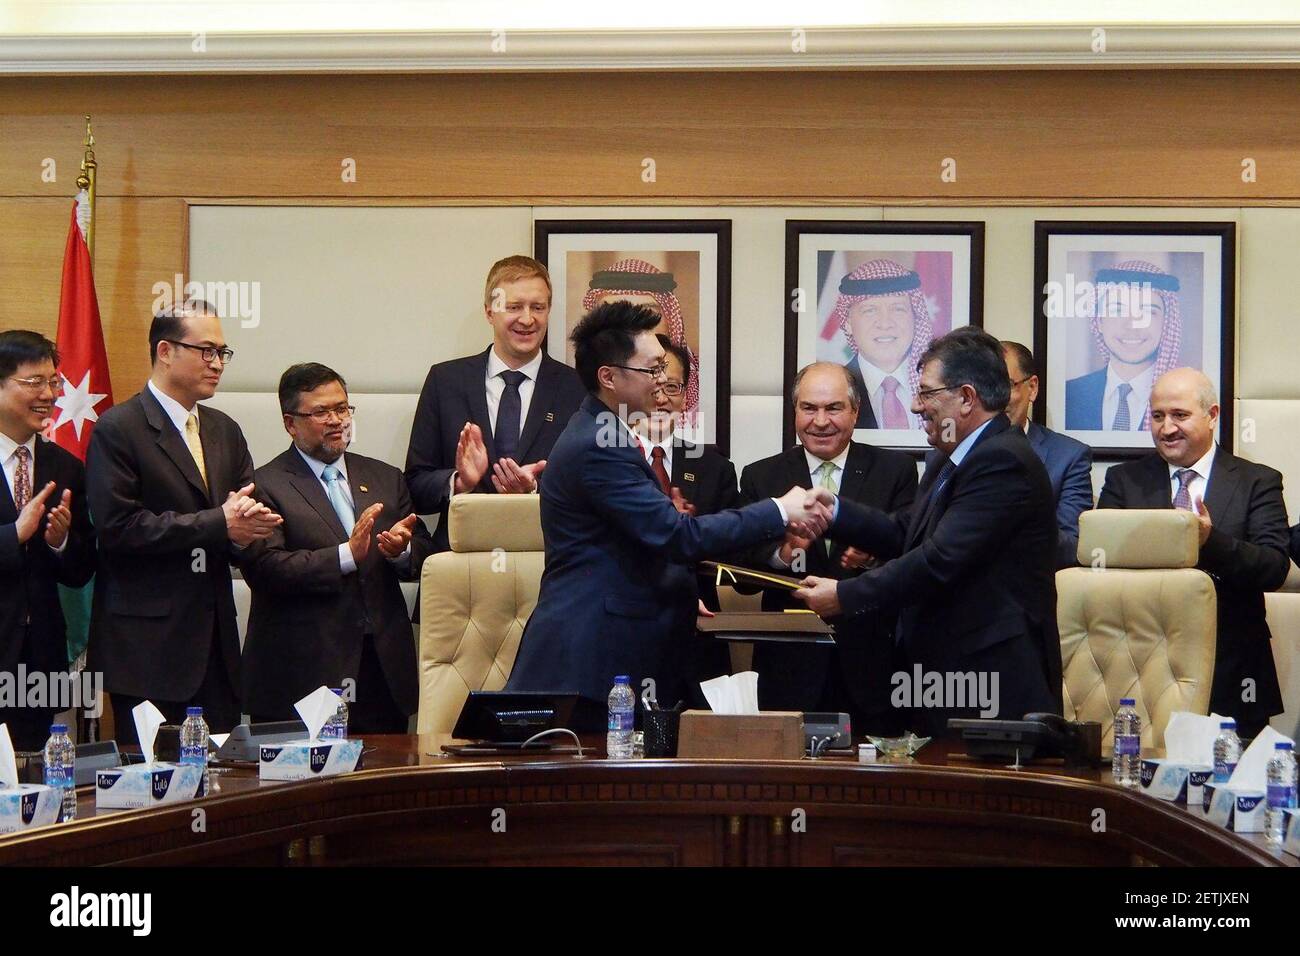 170316) -- AMMAN, March 16, 2017 (Xinhua) -- Jason Pok Hooi Loong (L,  Front), CEO designate of the Attarat Power Company (APCO), shakes hands  with Abdel Fattah Al-Daradkeh, director general of the